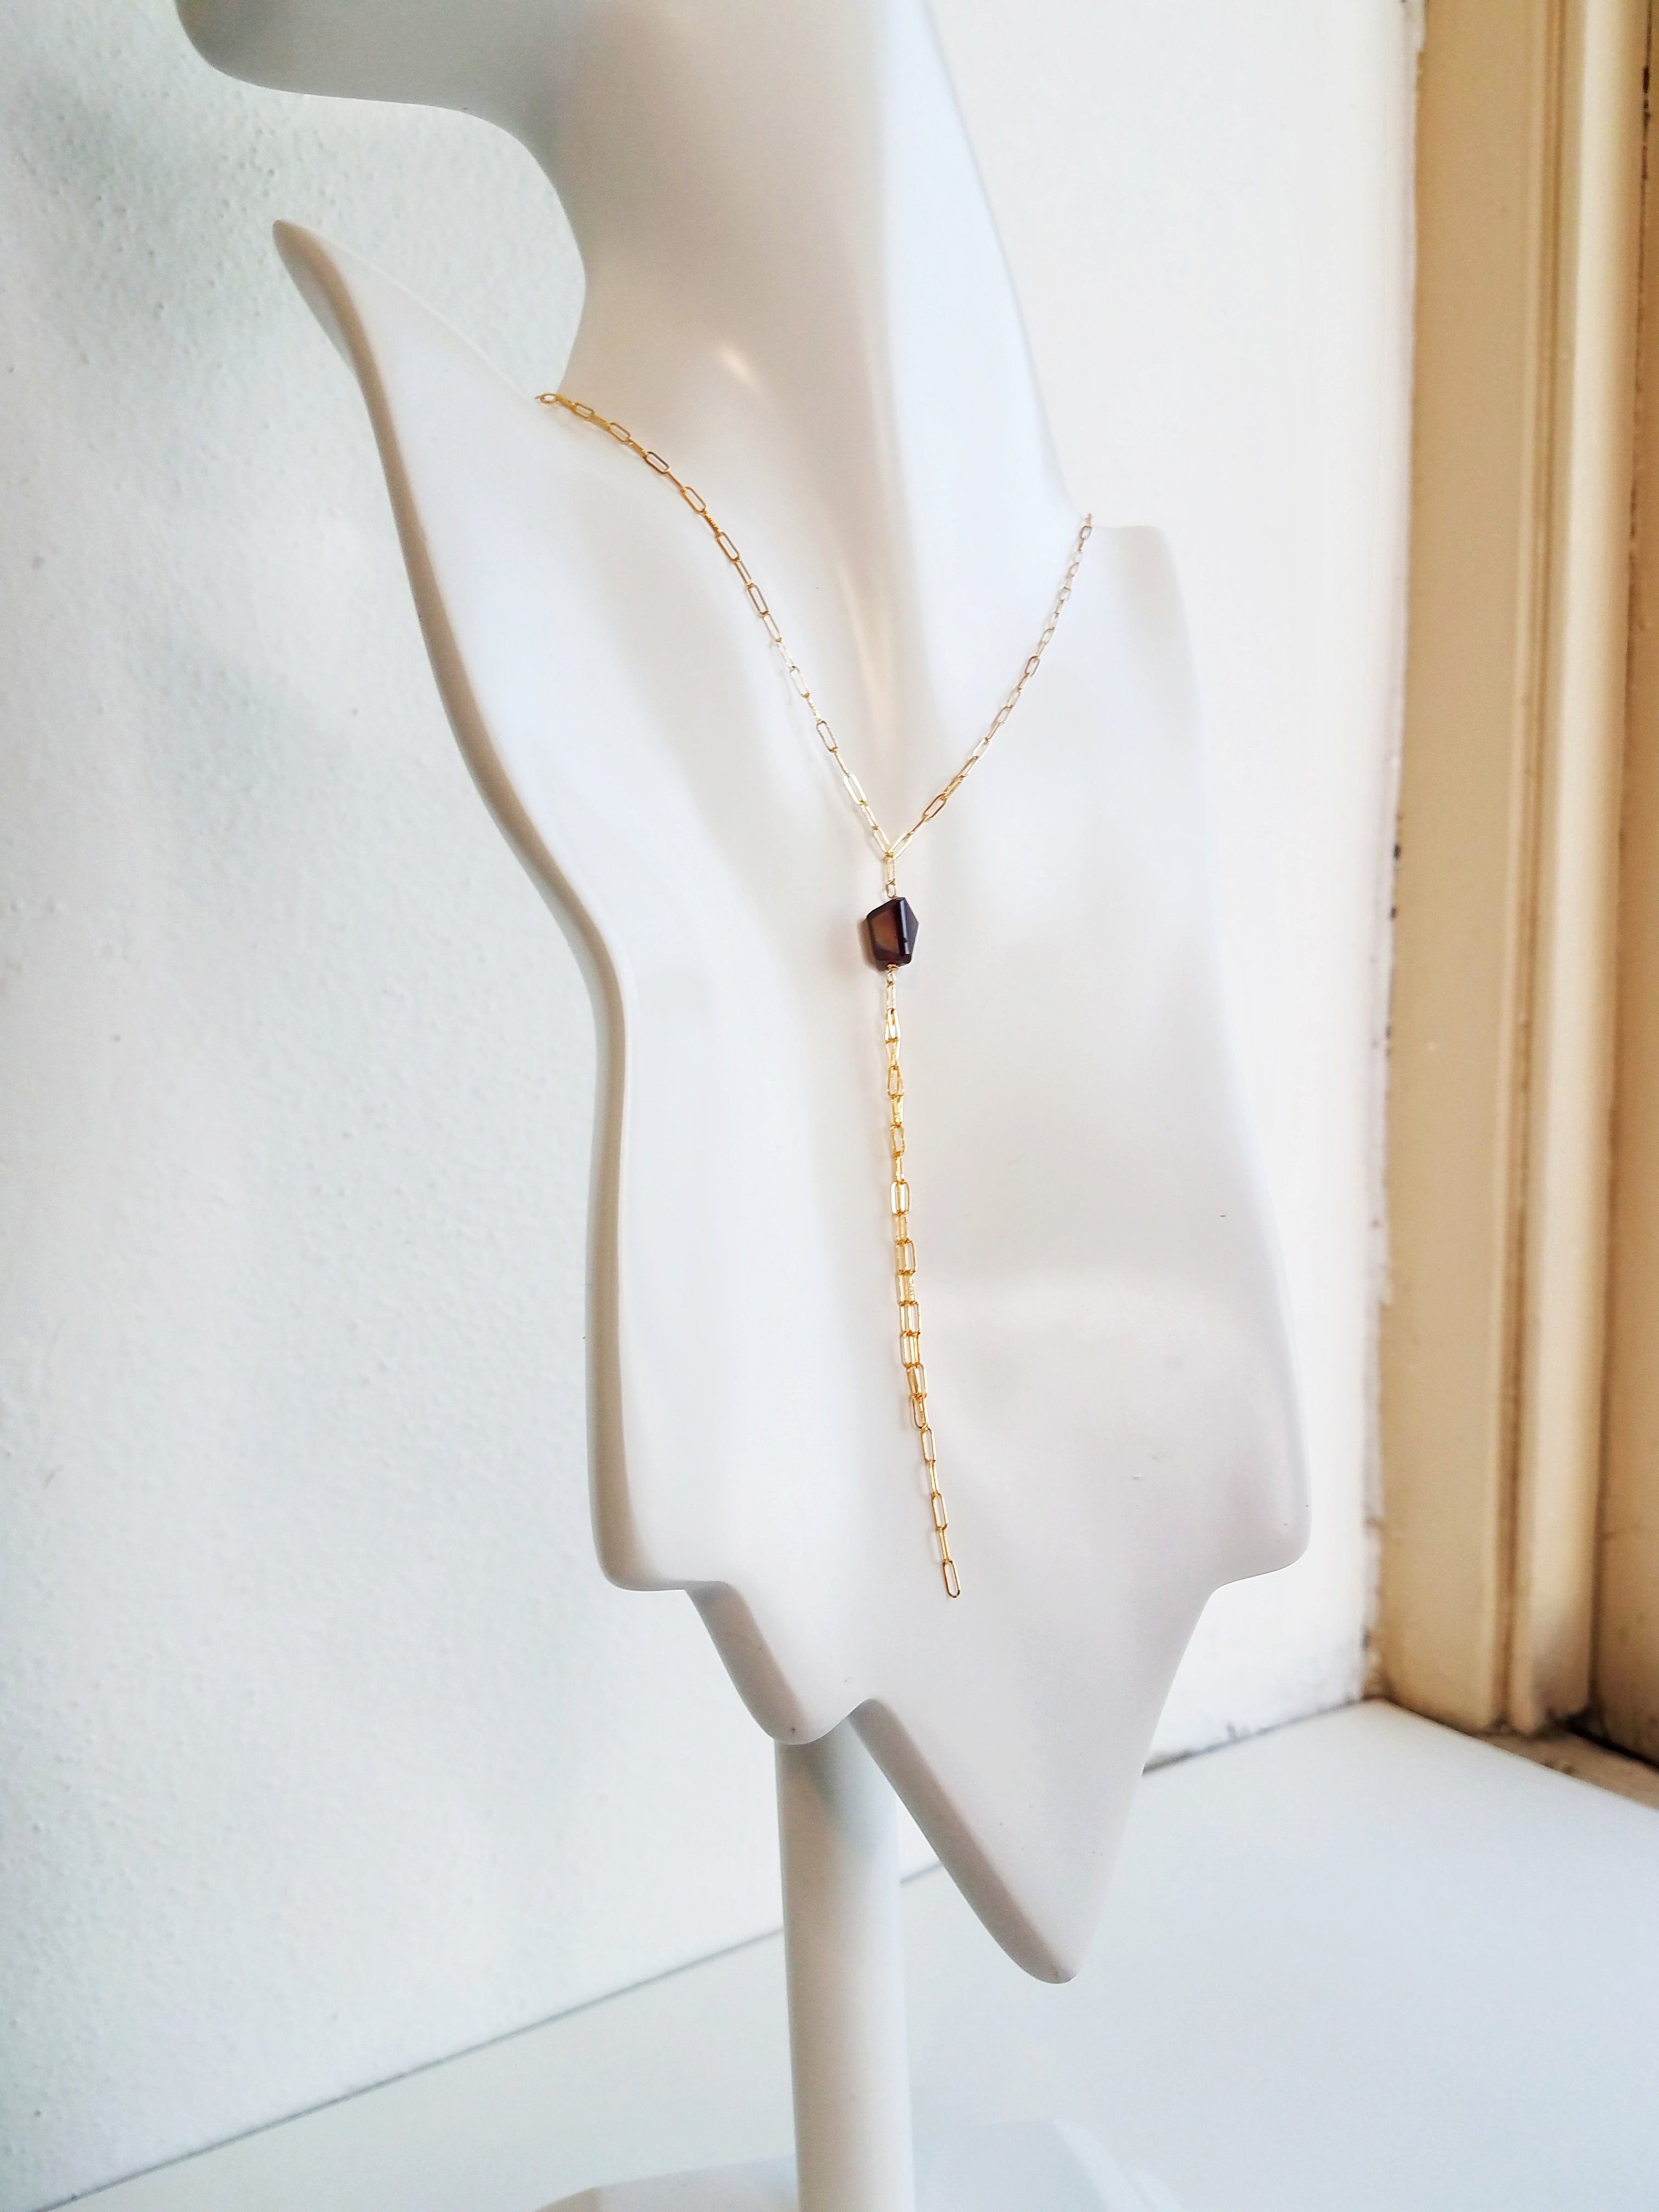 Garnet lariat necklace, gold filled, Jewelry designed by Billie Lorraine 